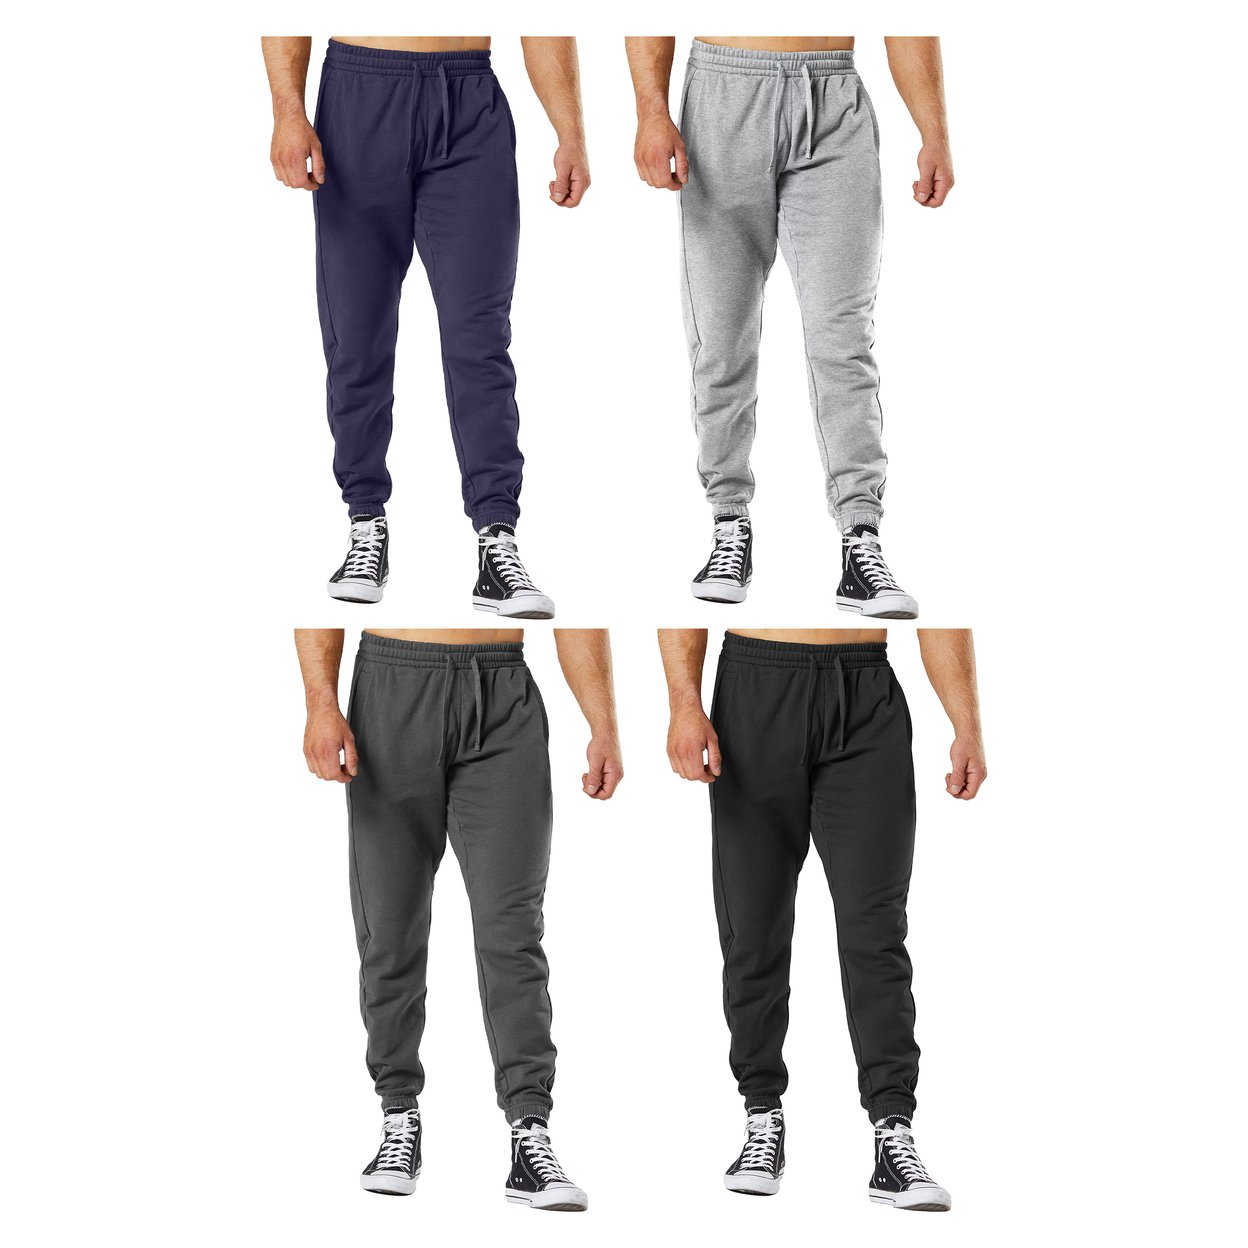 2-Pack: Men's Ultra-Soft Cozy Winter Warm Casual Fleece-Lined Sweatpants Jogger - Black & Navy, X-large